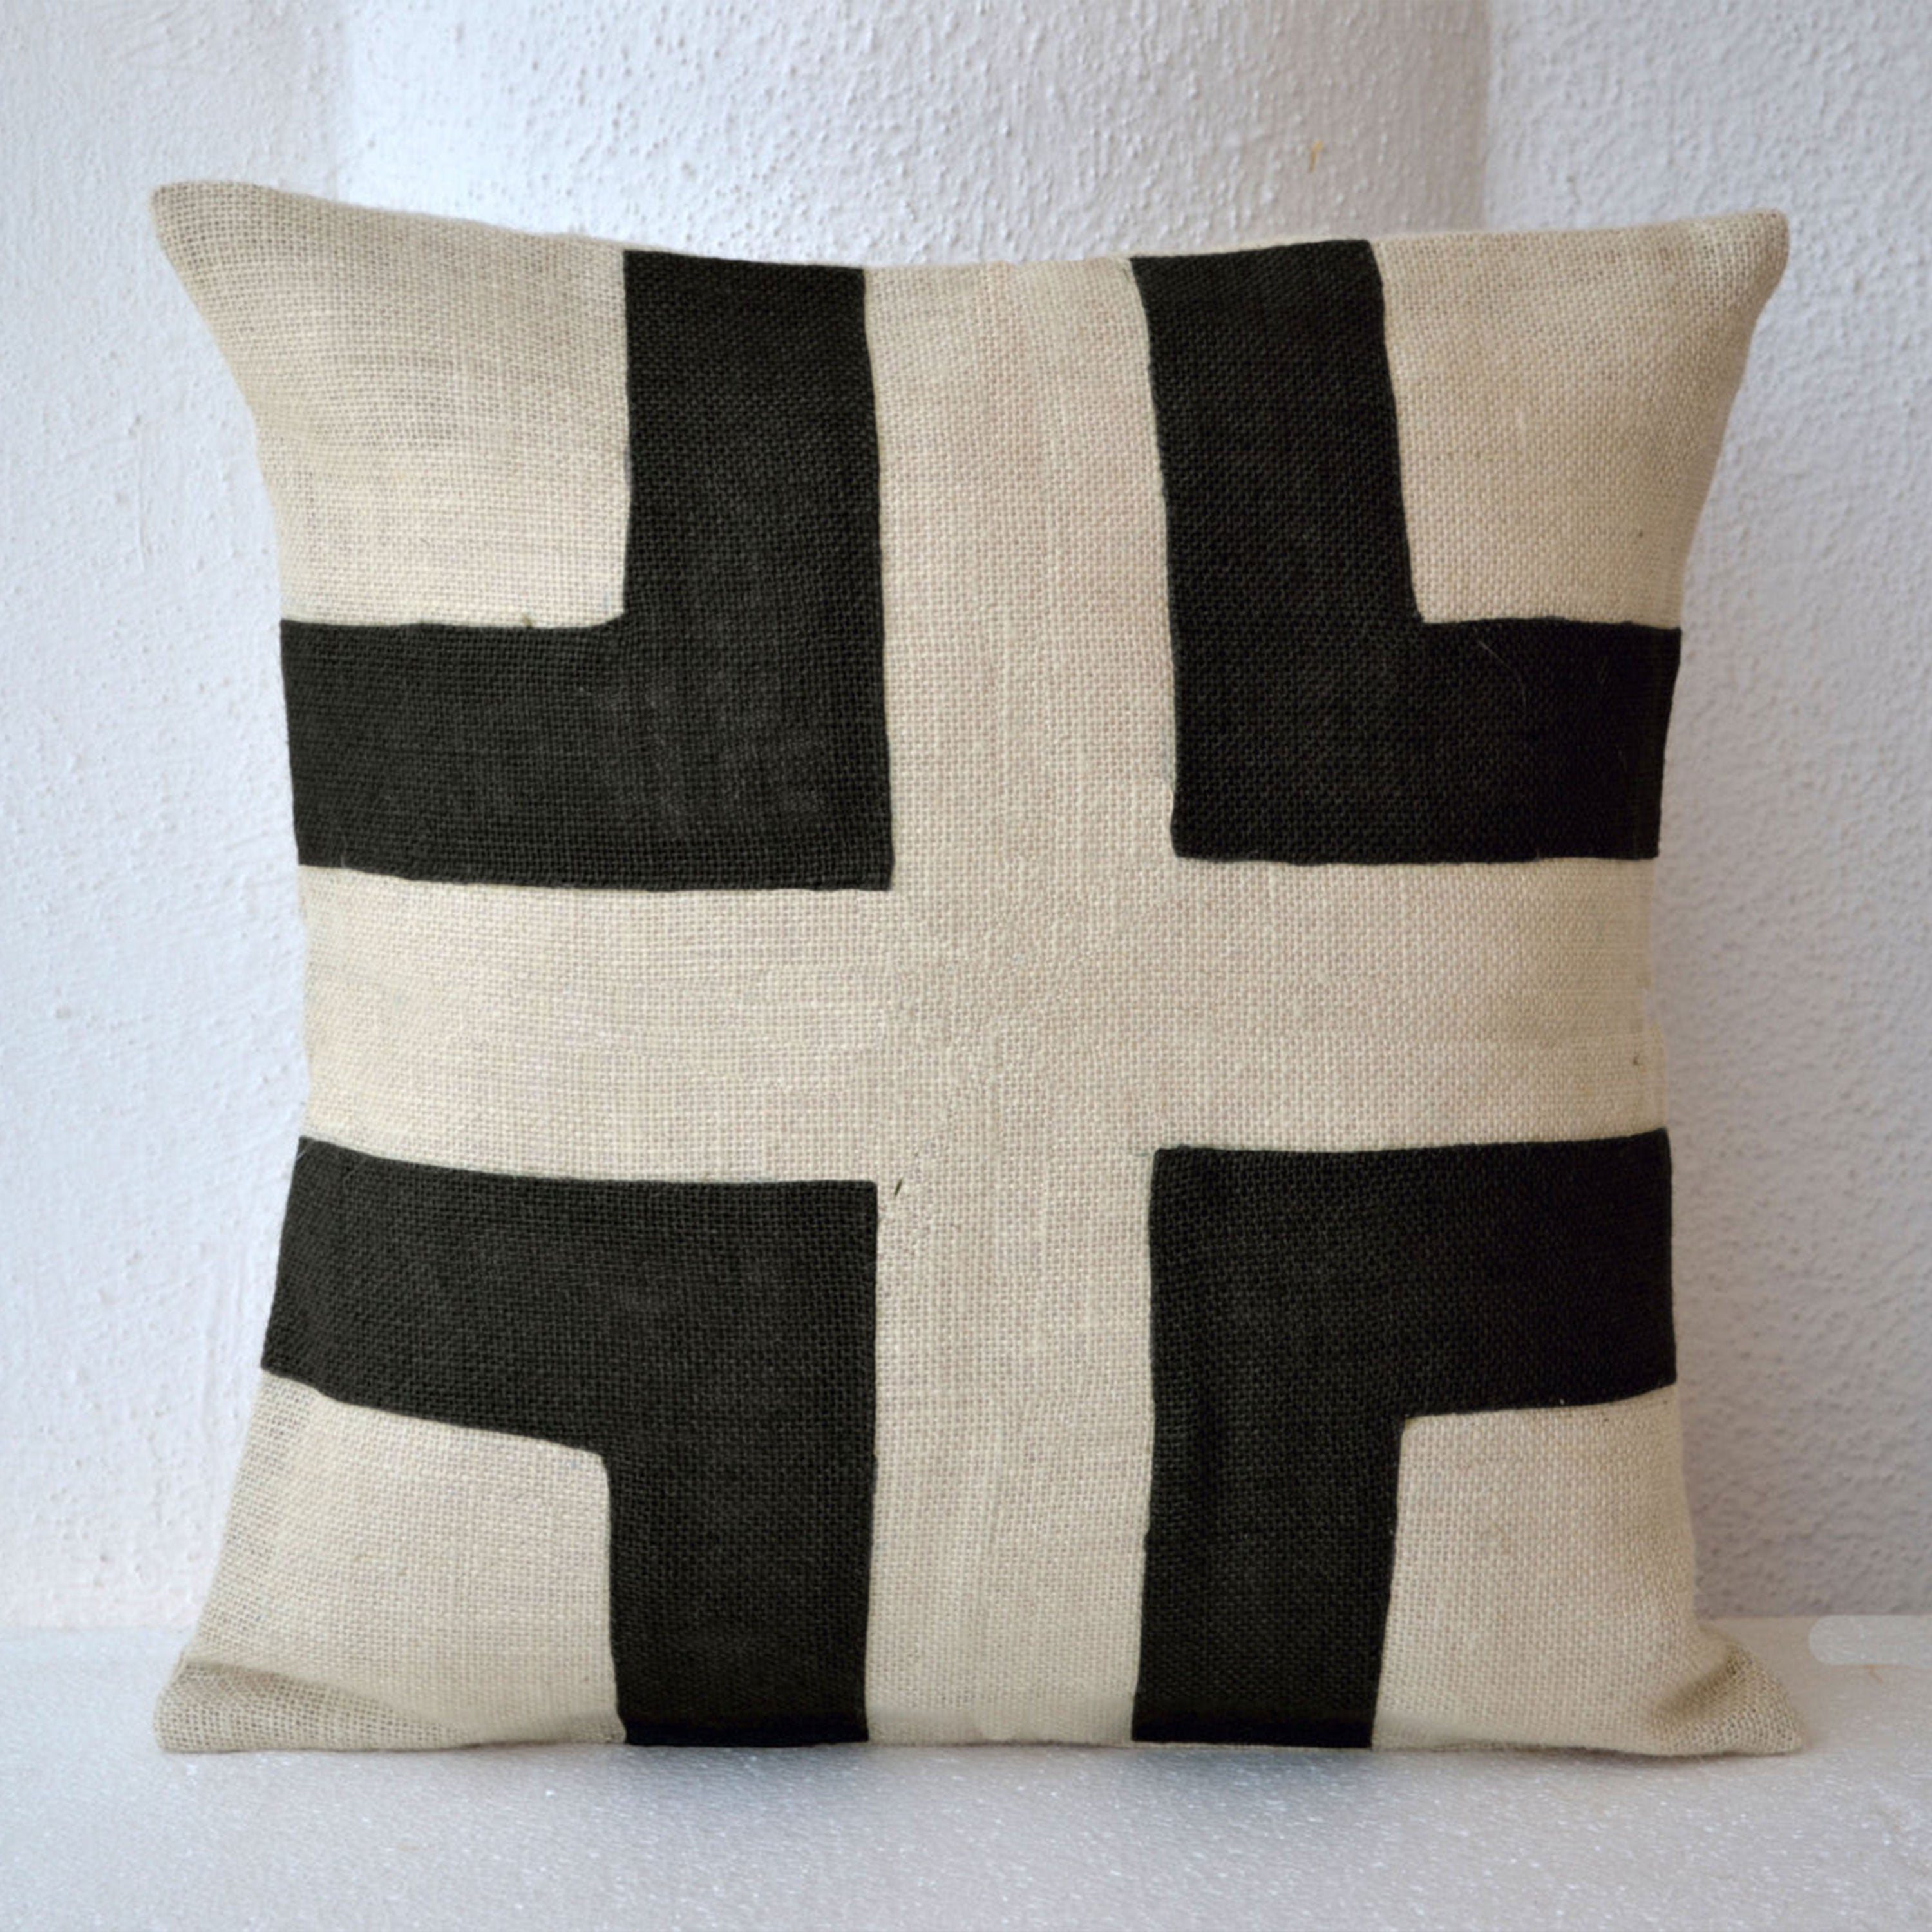 Ivory White Burlap pillow with black burlap applique - Cream Black Decorative cushion cover- gift pillow- Spring Throw pillow 18X18